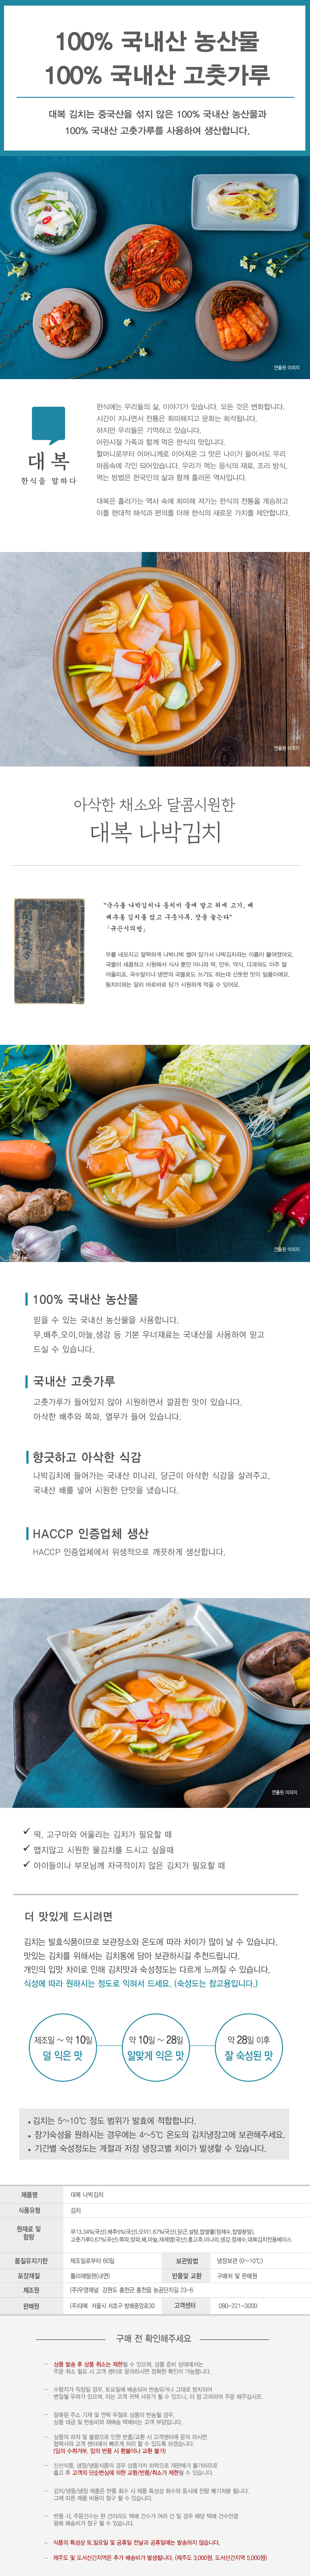 kimchi(na)h.jpg